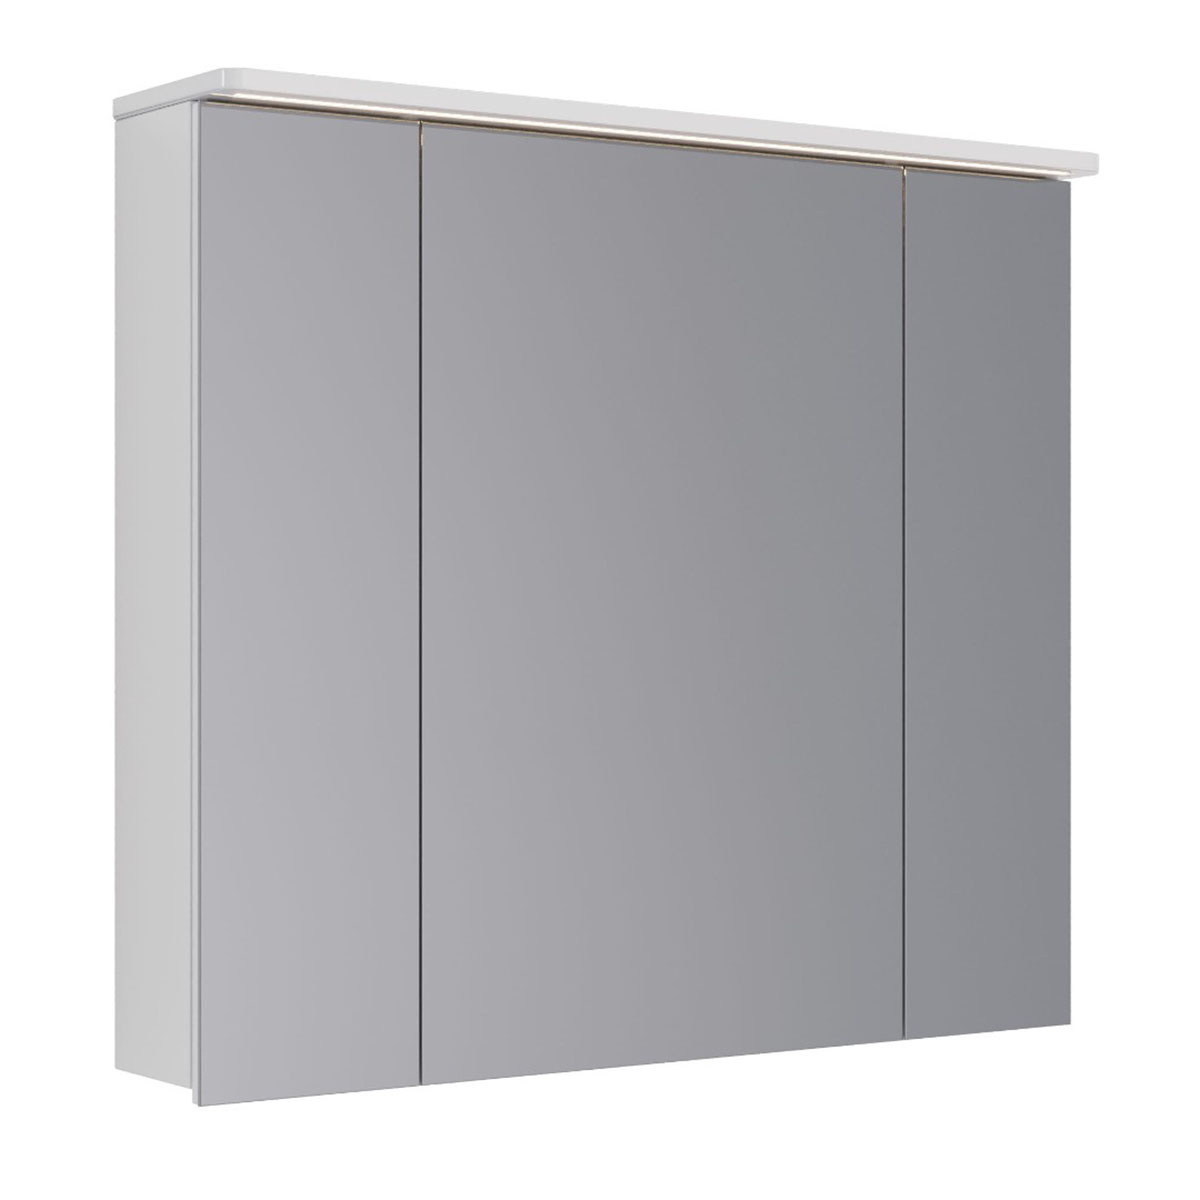 Шкаф зеркальный Lemark ZENON 90х80 см 3-х дверный, с козырьком-подсветкой, с розеткой, цвет корпуса: Белый глянец